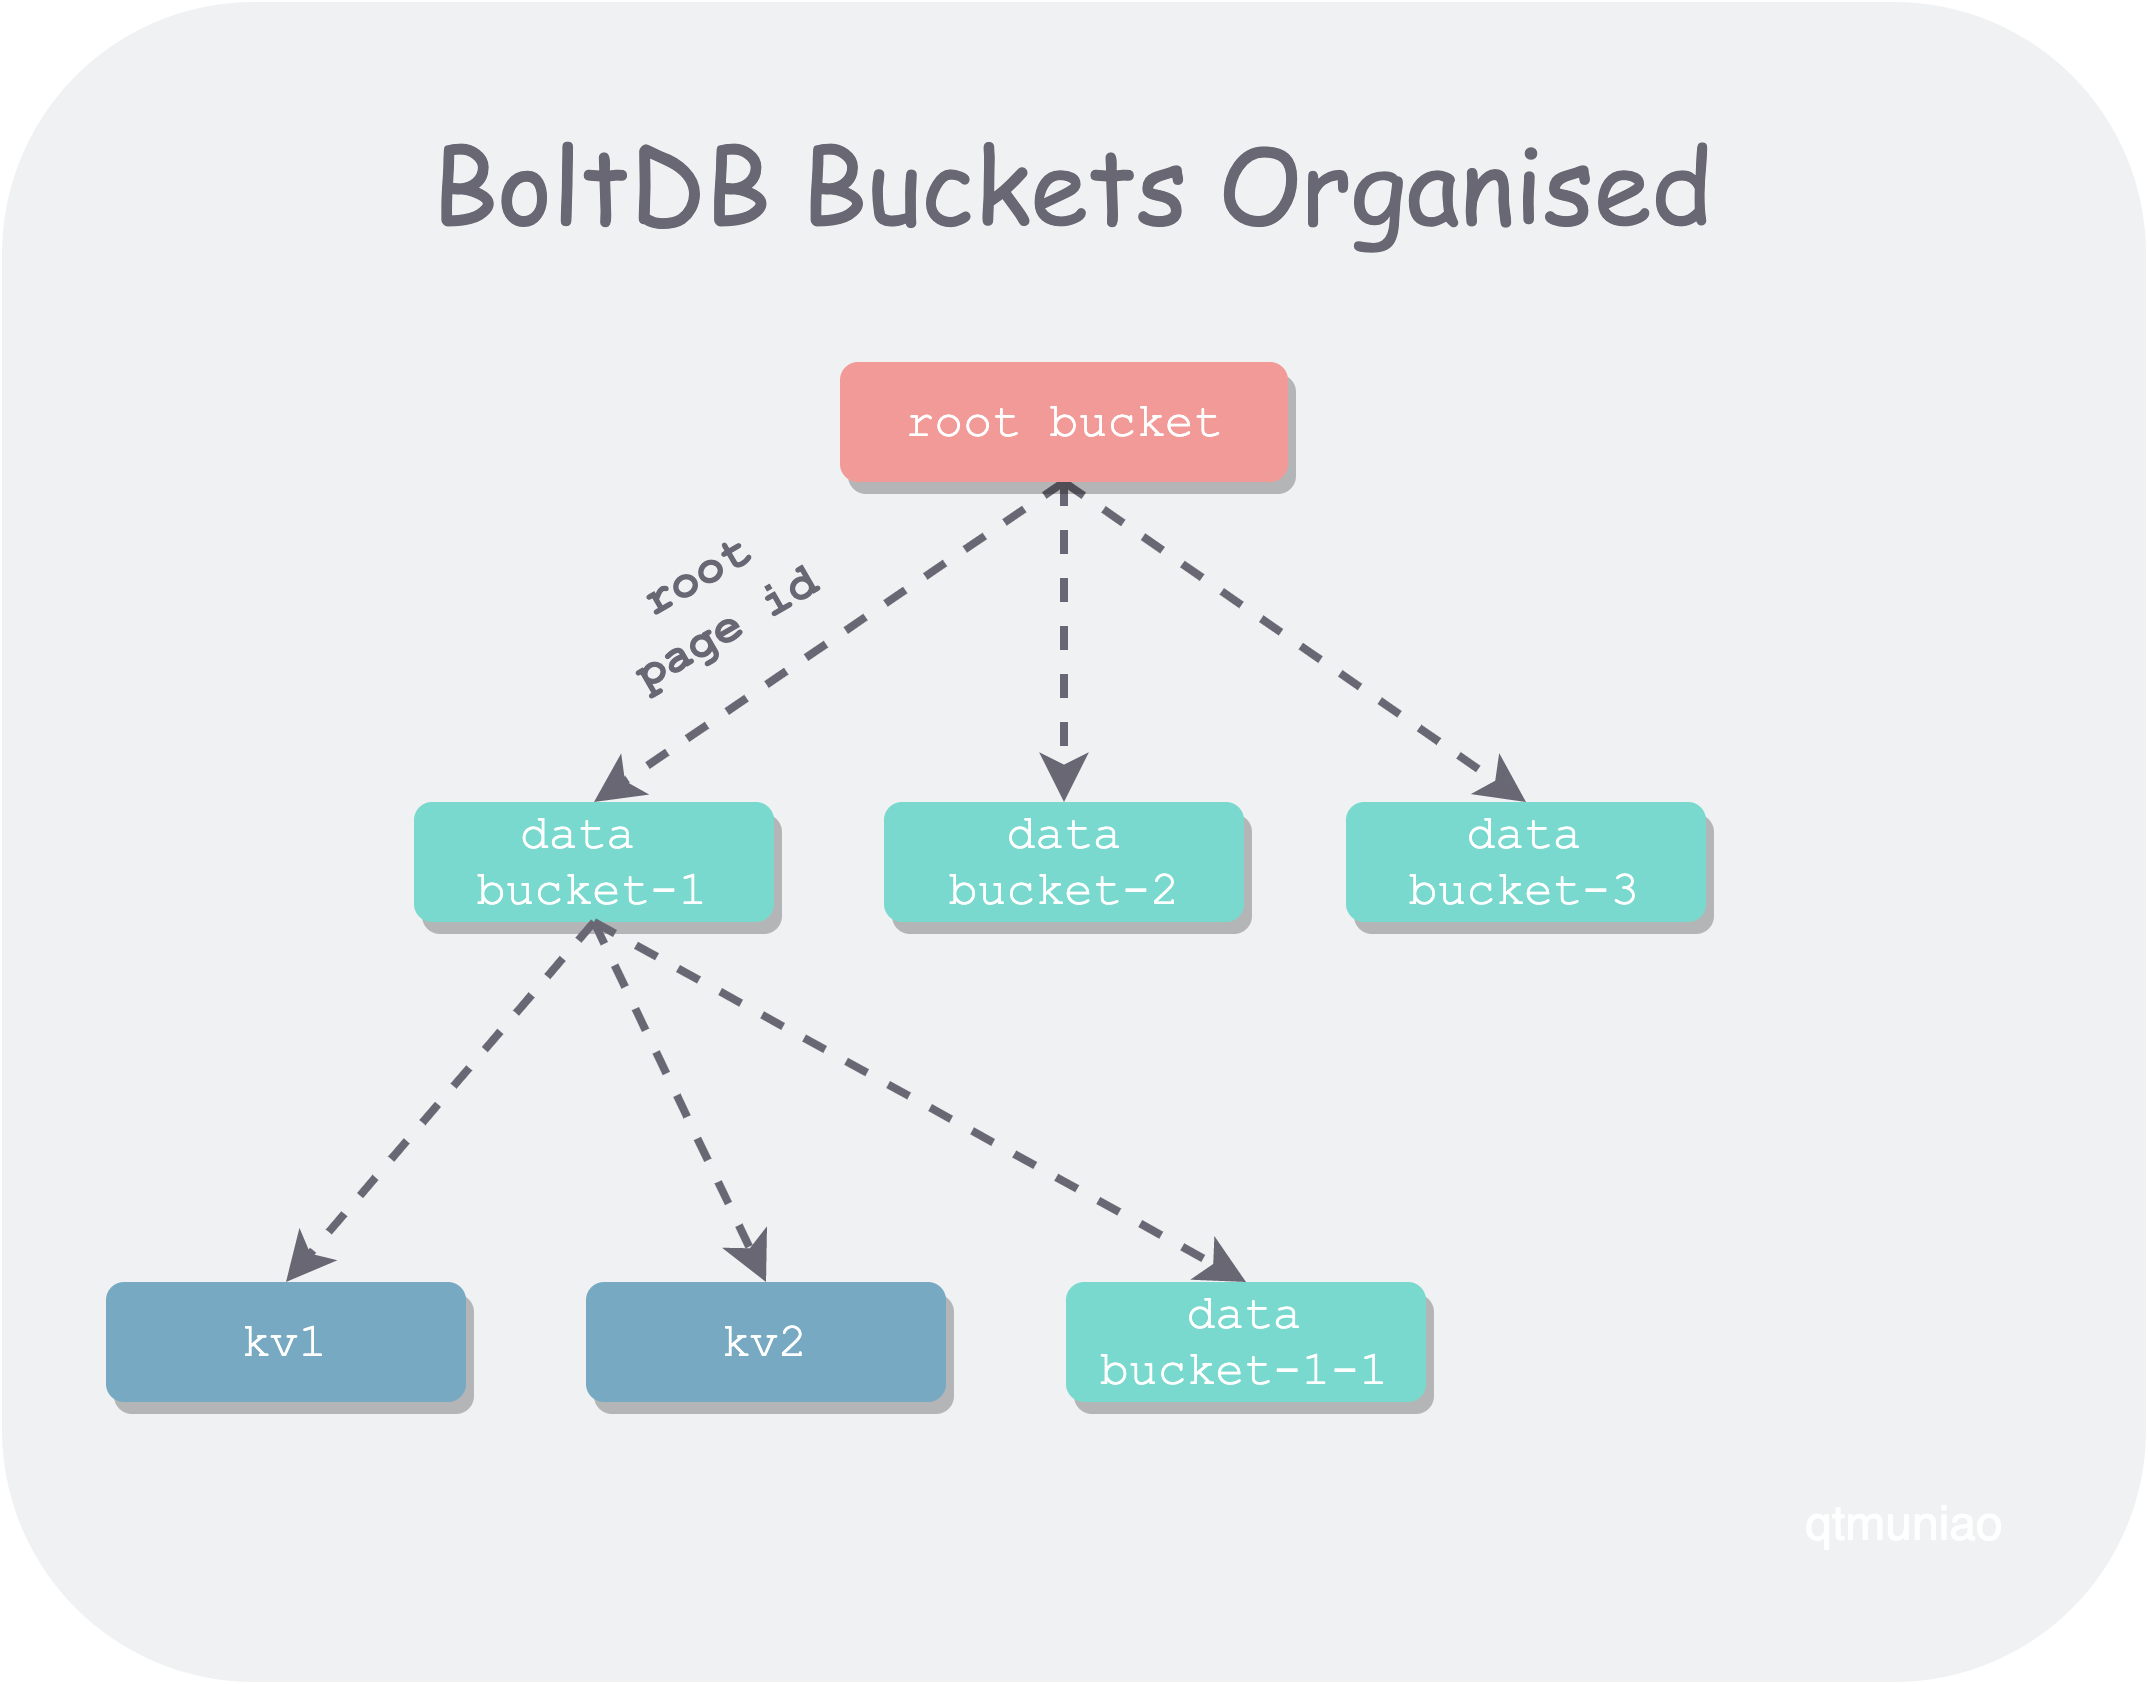 boltdb-buckets-organised.png